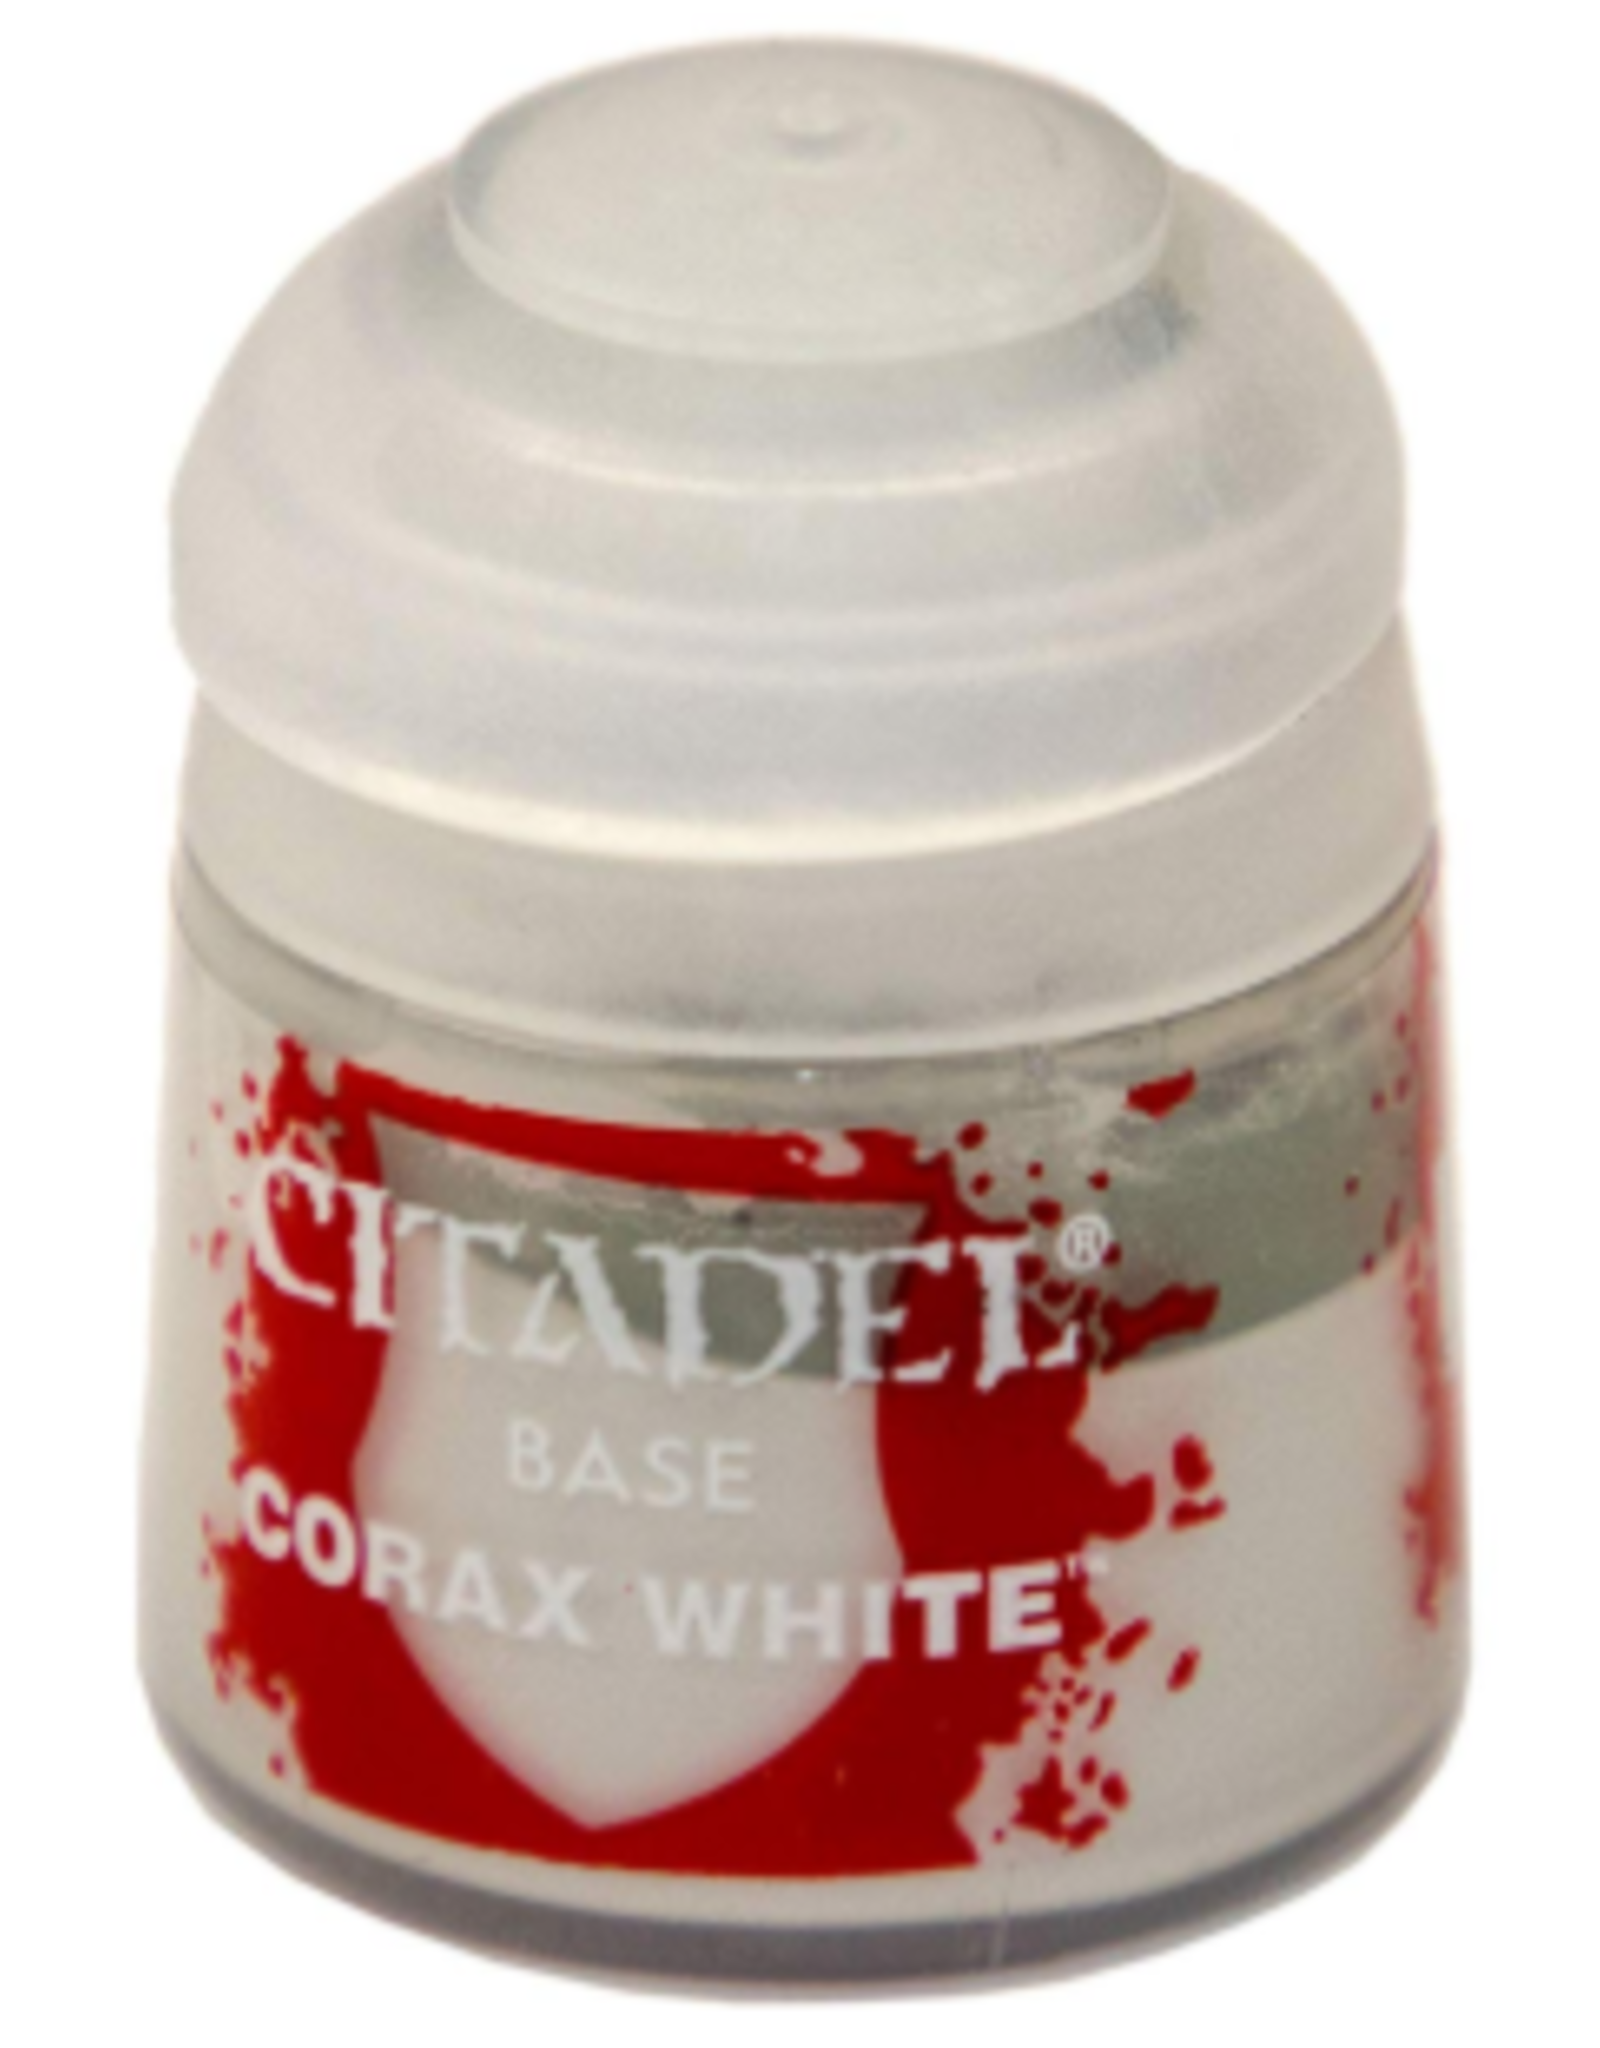 Base: Corax White Paint